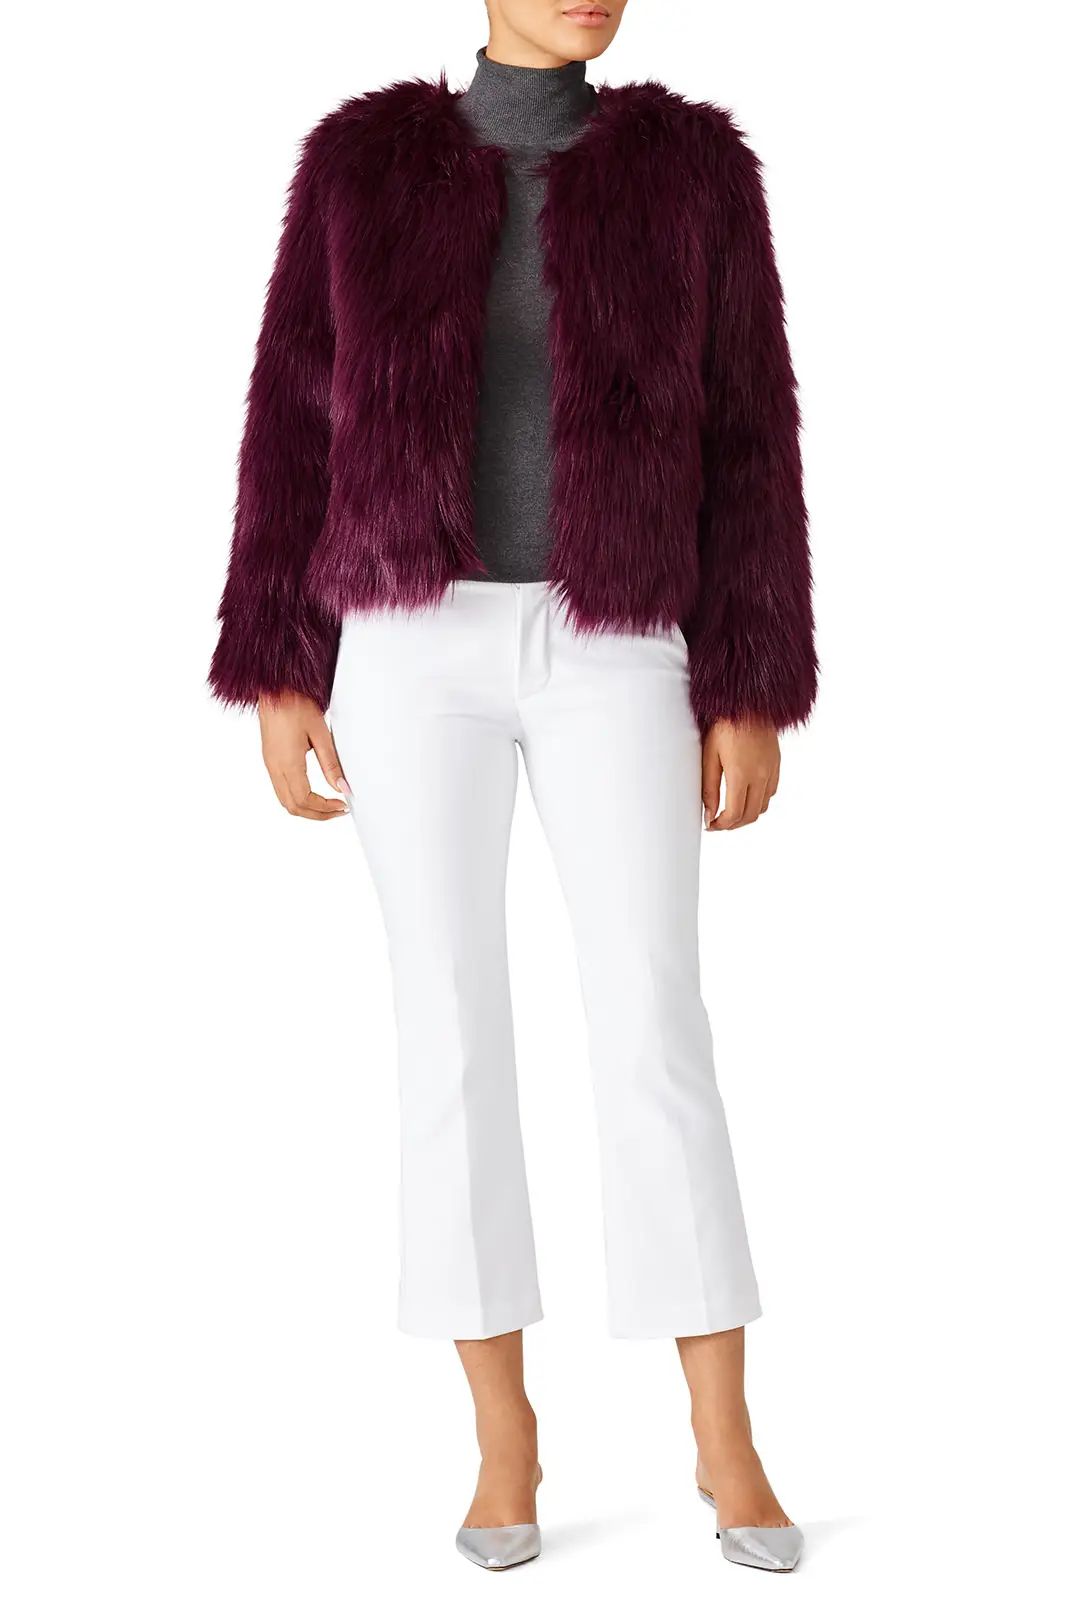 Unreal Fur Plum Faux Fur Jacket | Rent The Runway